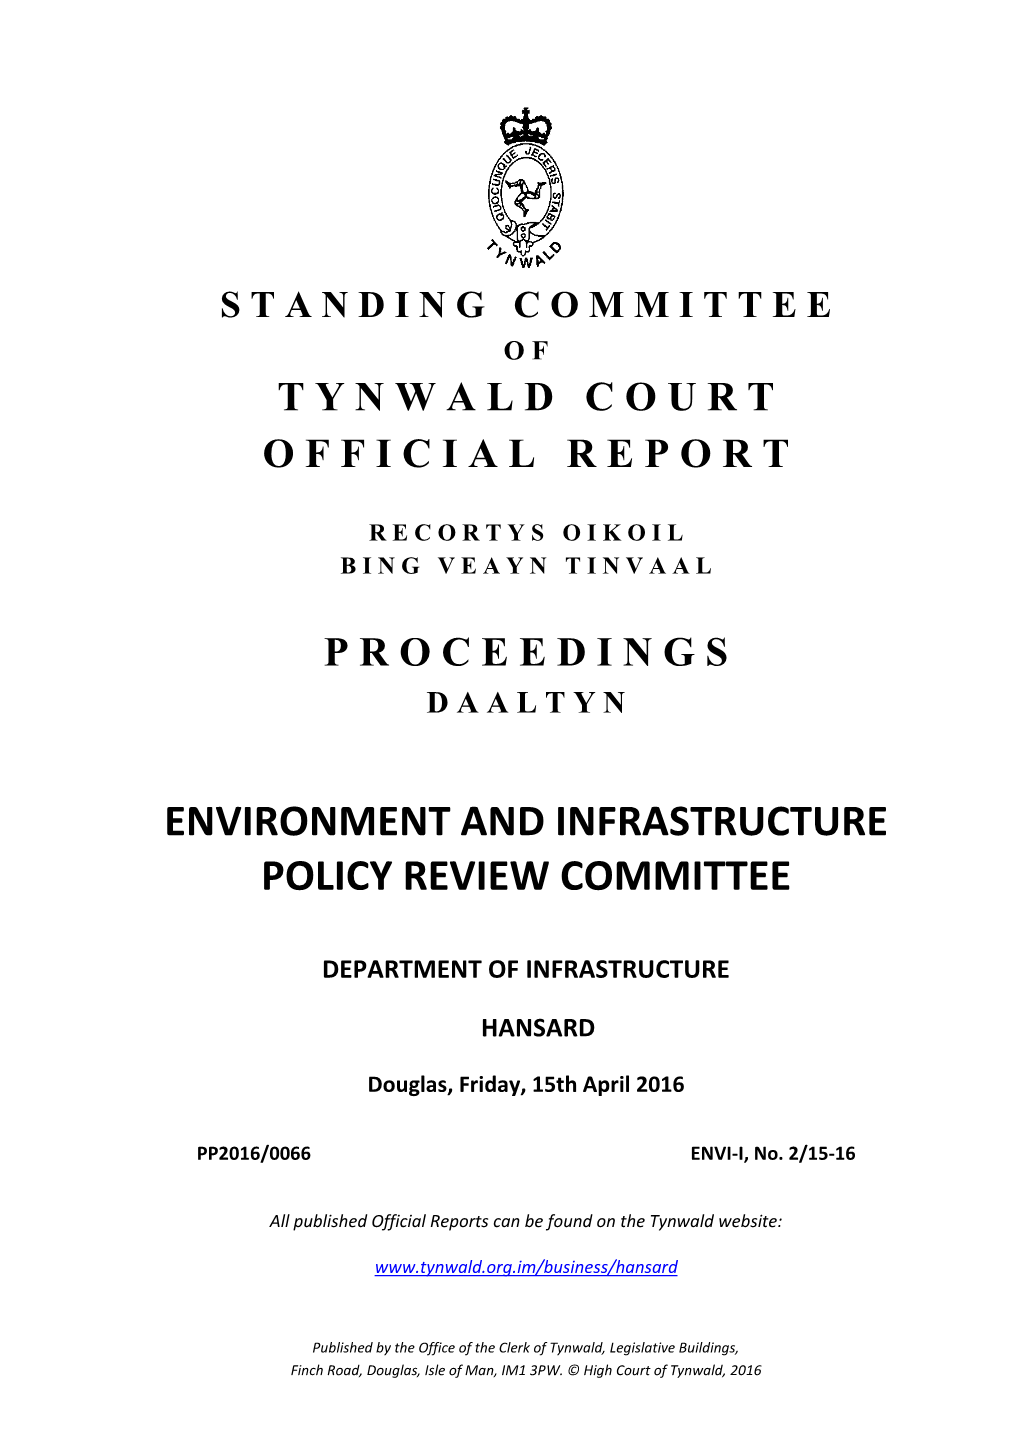 Hansard of Oral Evidence 15 April 2016 Department of Infrastructure